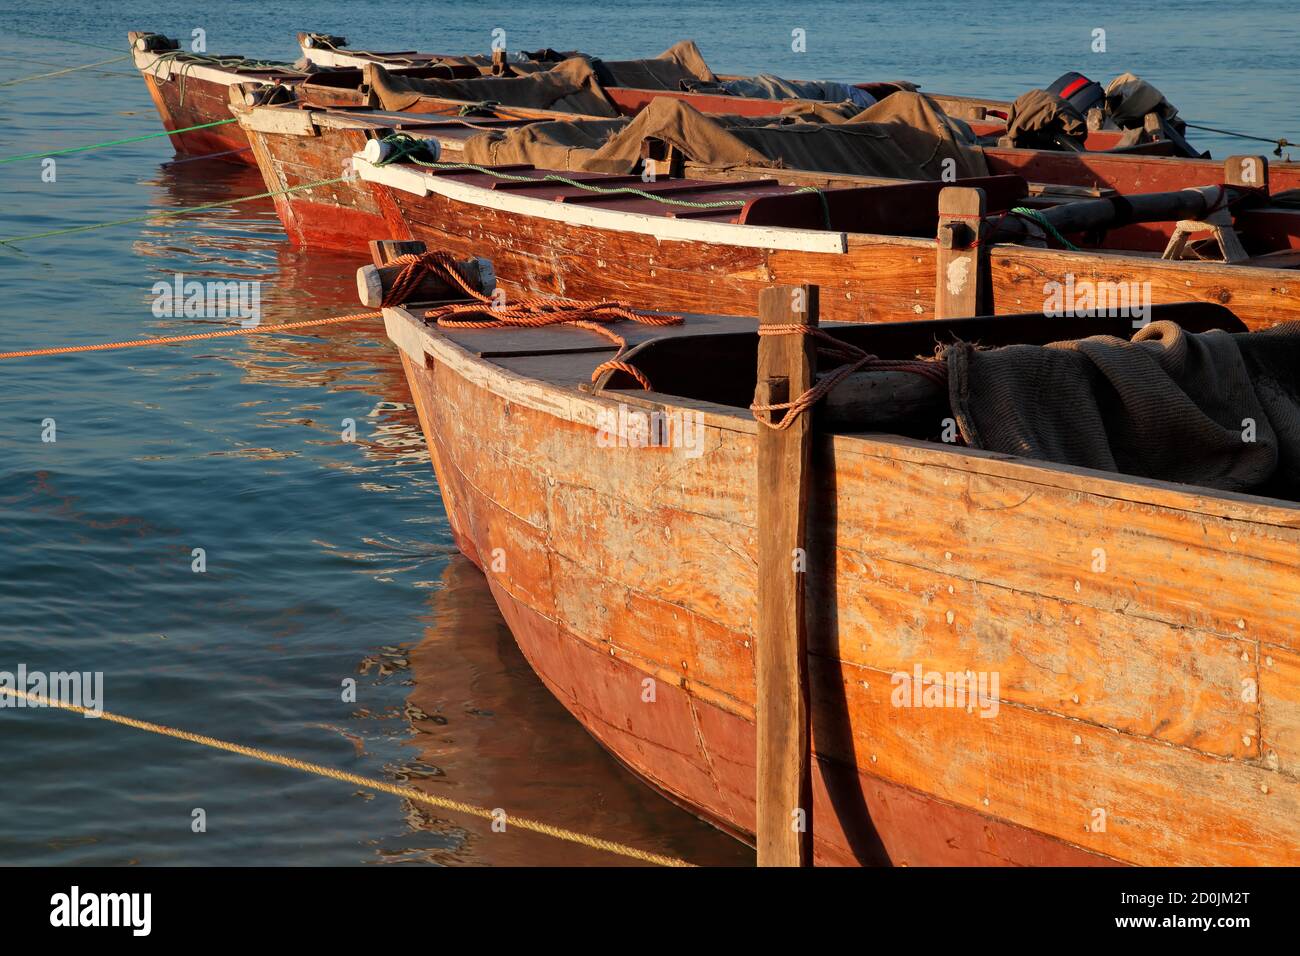 Anchored wooden boats in late afternoon light, Zanzibar island Stock Photo